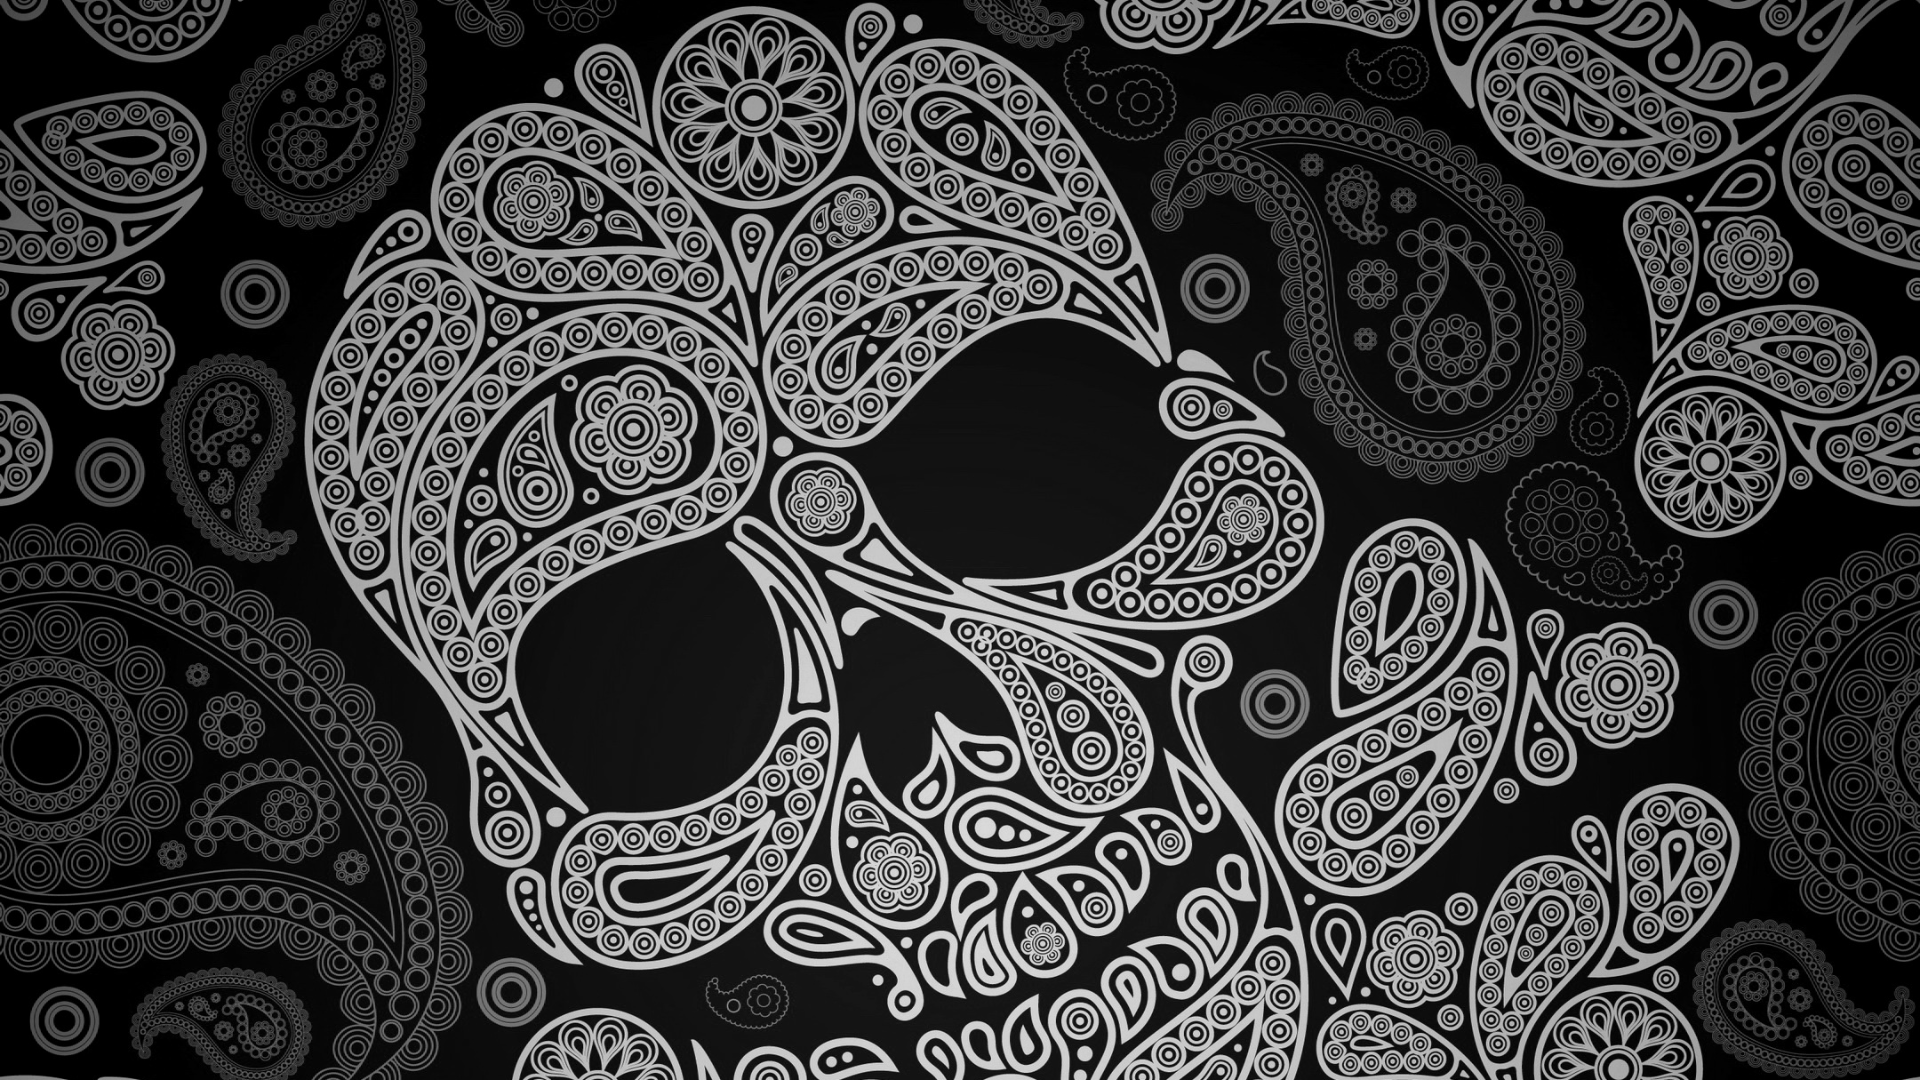 Girly Sugar Skull Wallpaper Paisley